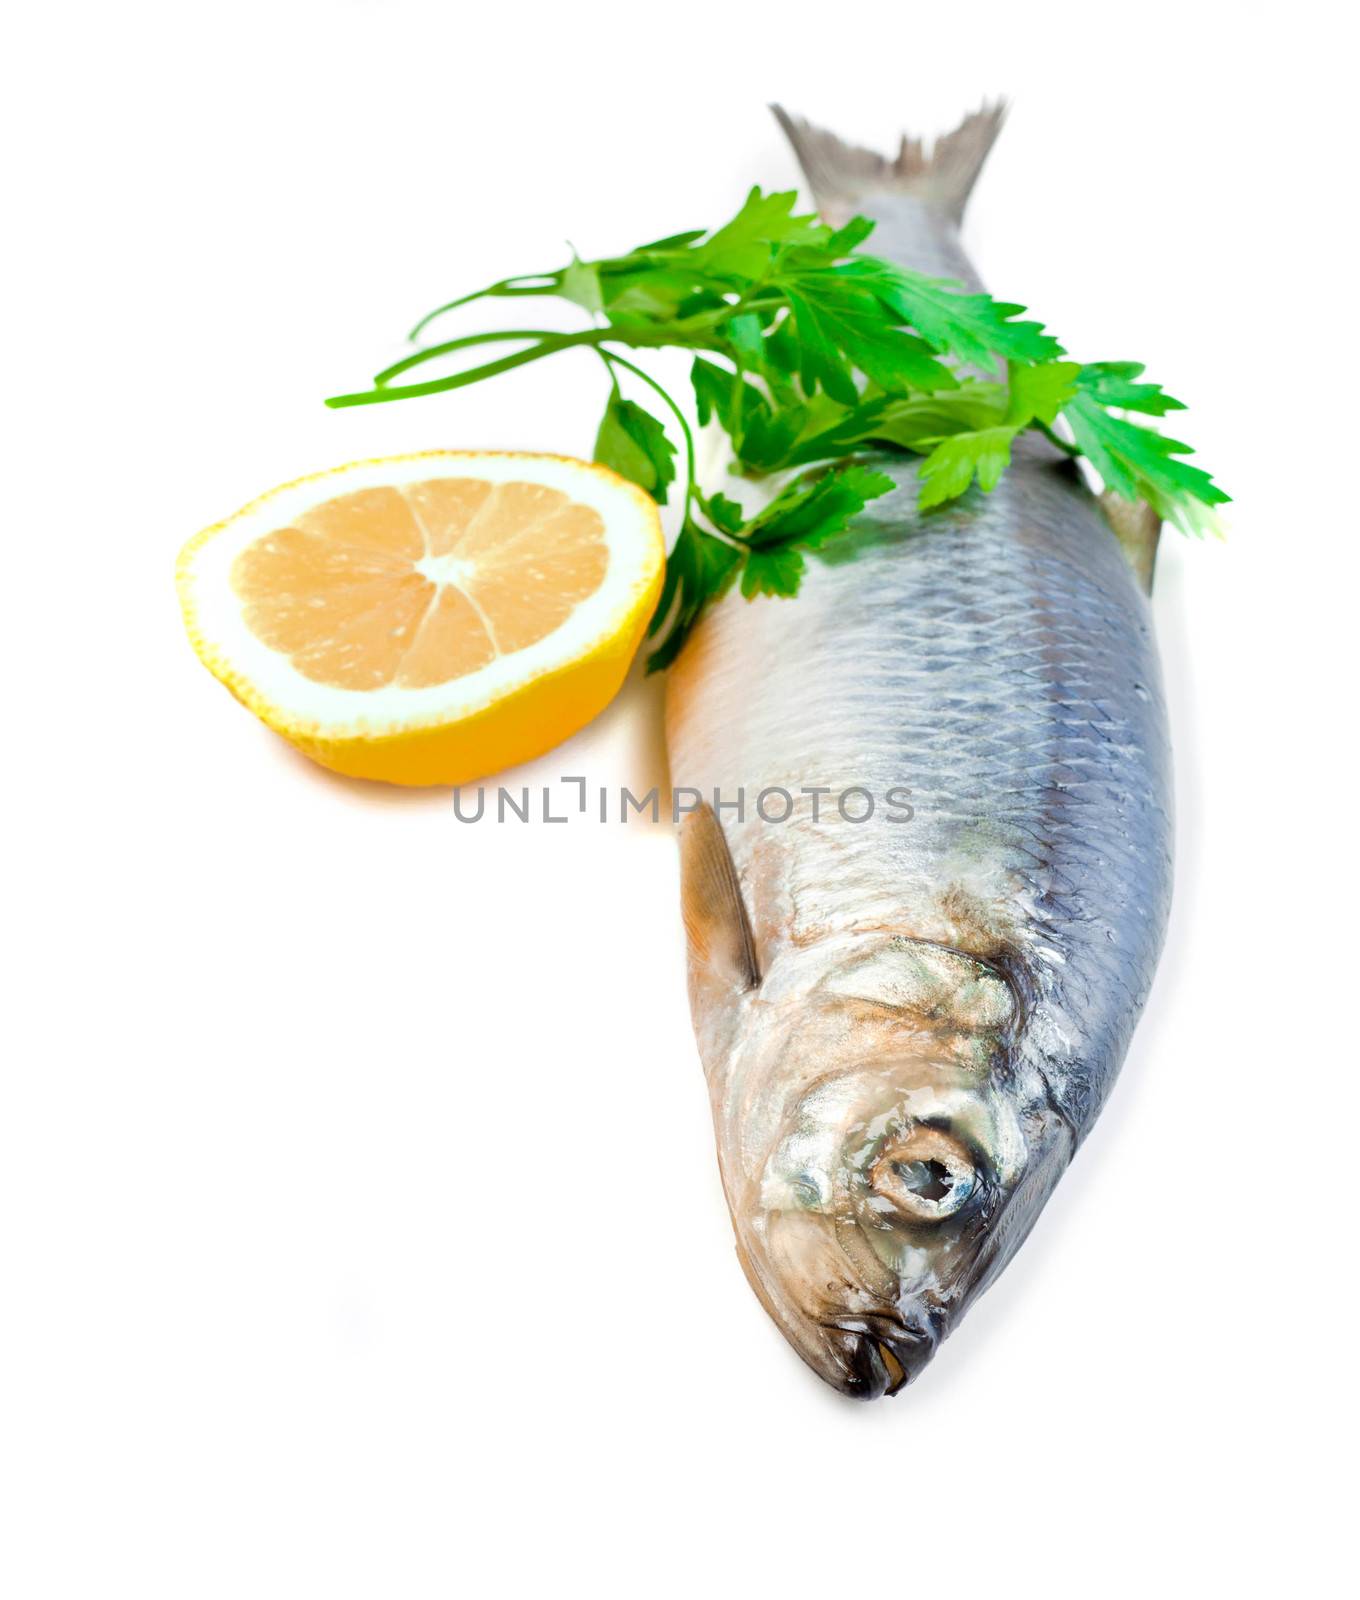 fish with lemon by shutswis